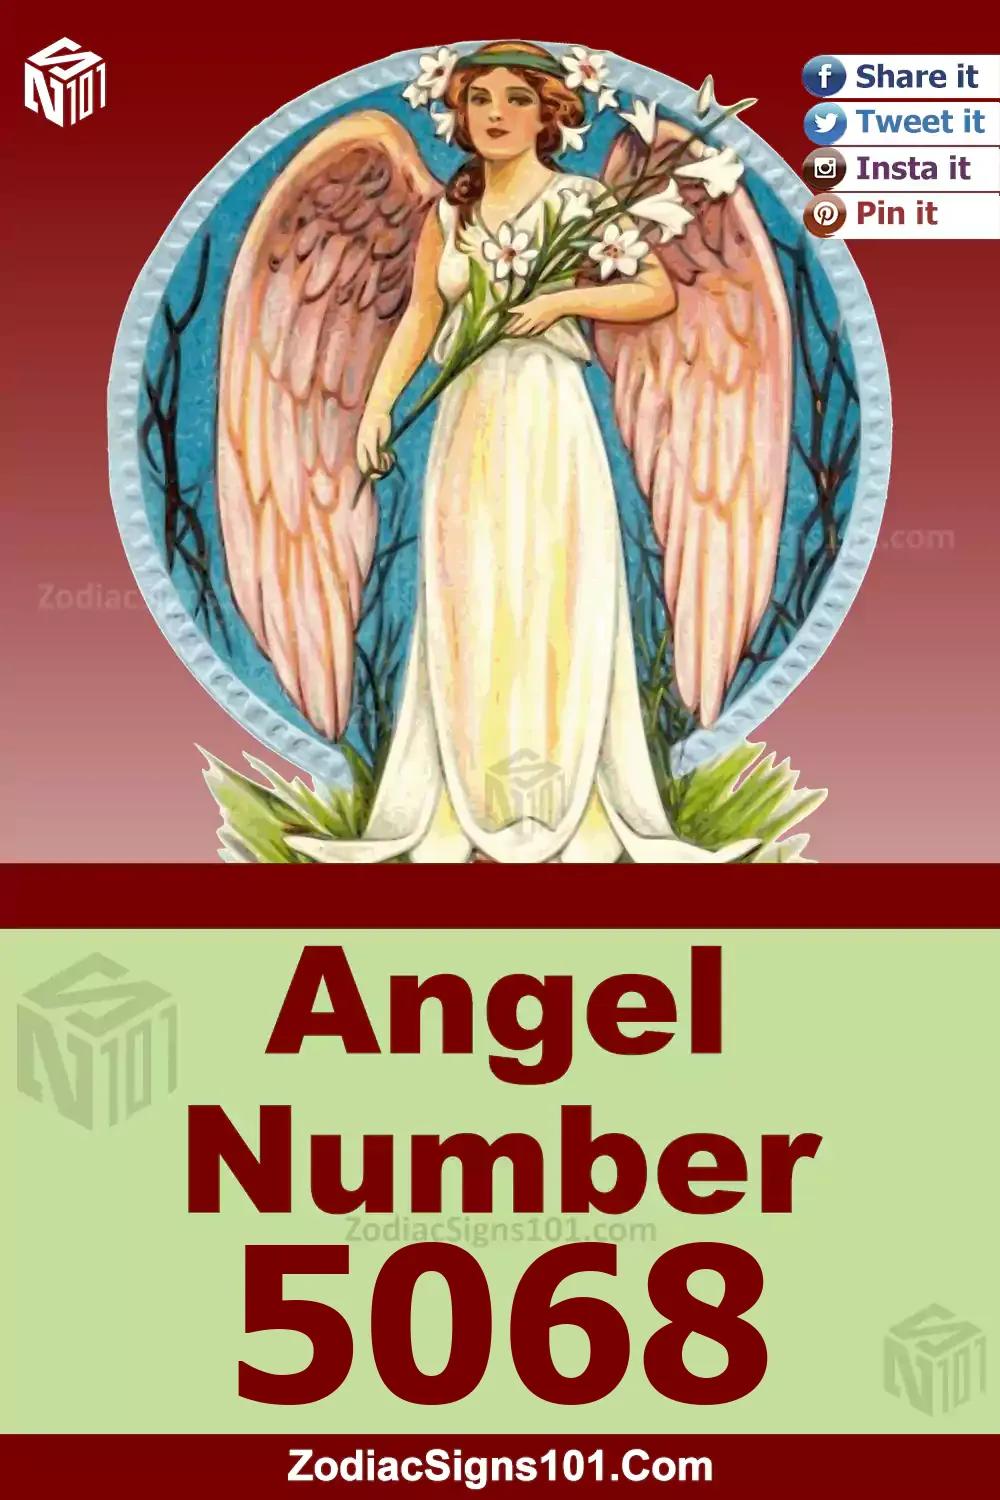 5068-Angel-Number-Meaning.jpg